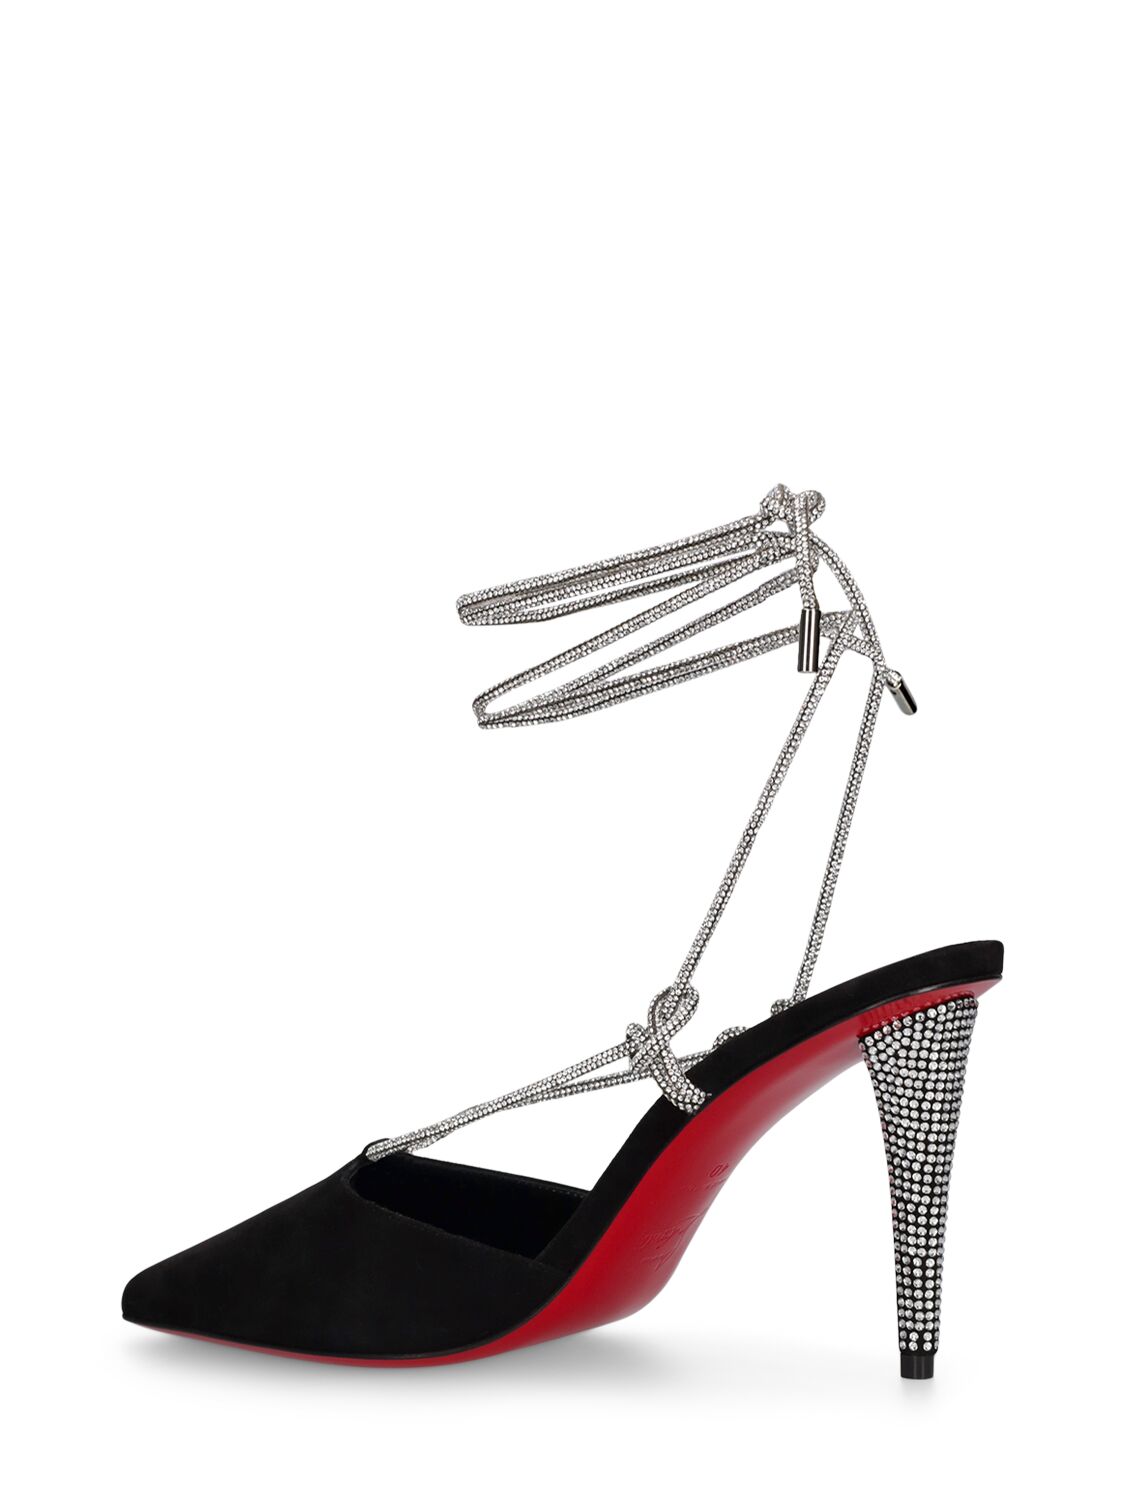 Shop Christian Louboutin 85mm Astrid Suede & Crystal Heels In Black,silver